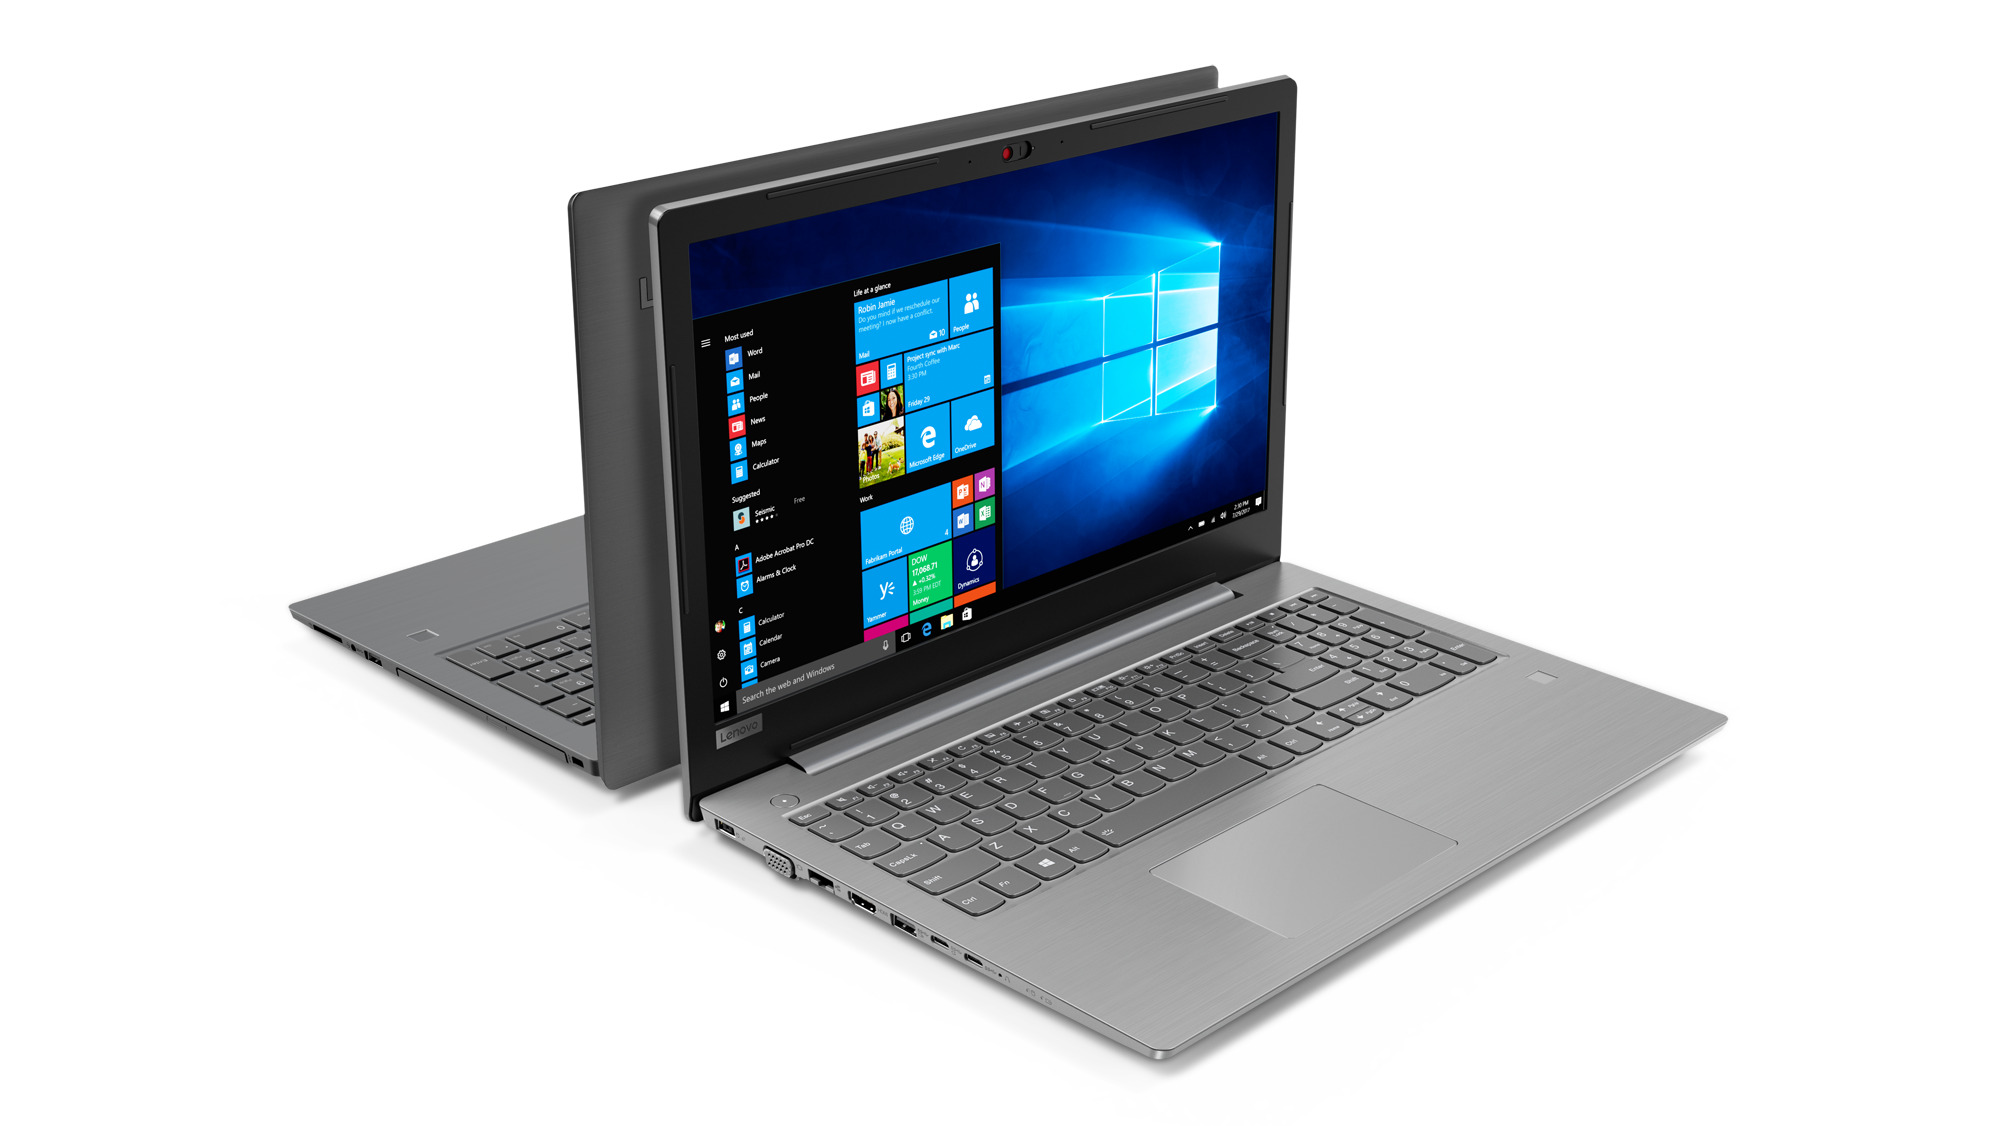 Laptop Lenovo V330-15IKB 81AX00MBVN - Intel Core i3-8130U 4GB RAM, HDD 1TB, Intel UHD Graphics 620, 15.6 inch